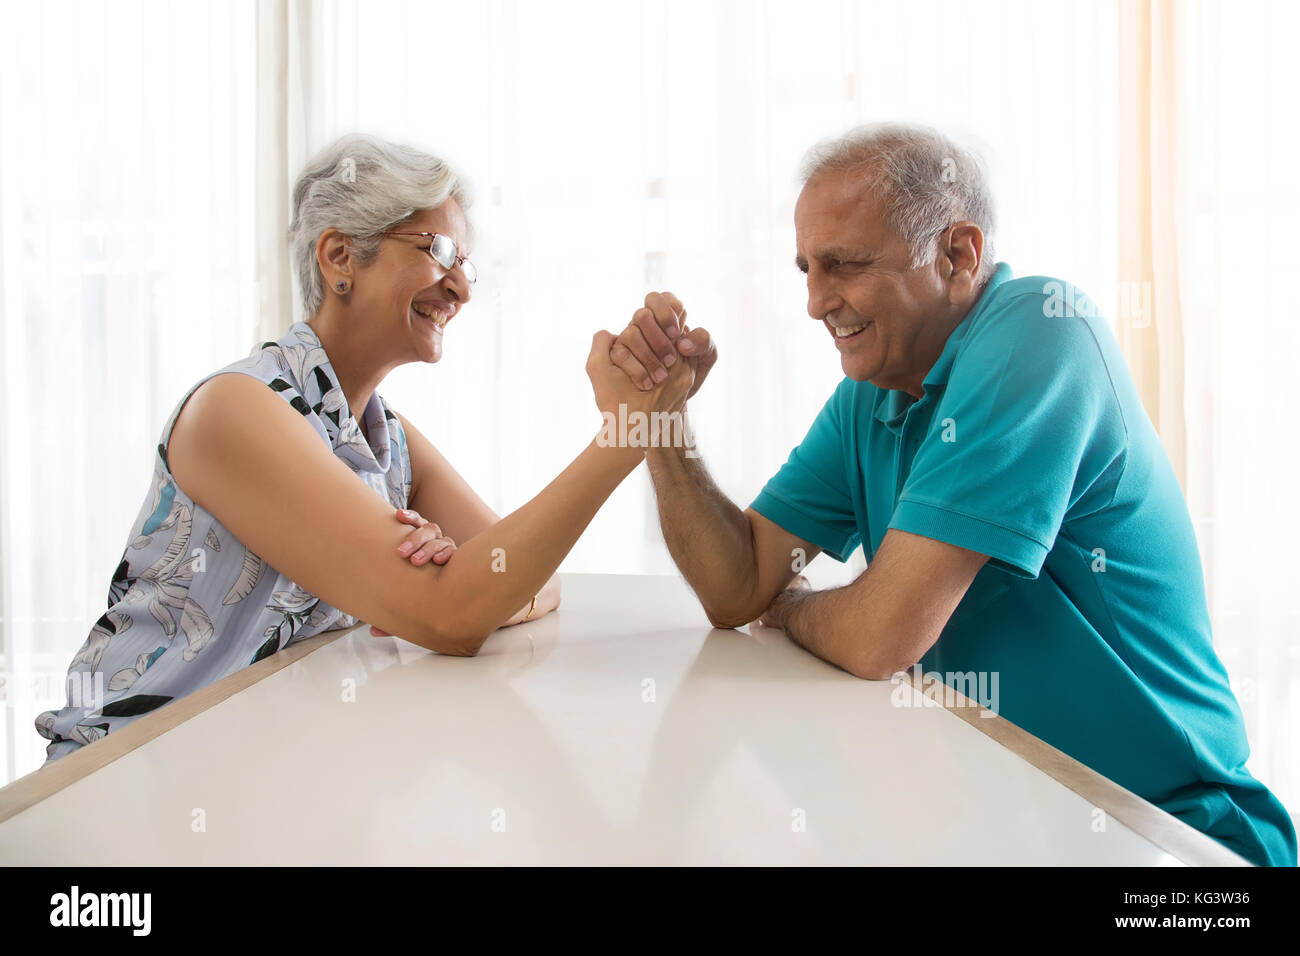 Senior couple arm wrestling at table Stock Photo